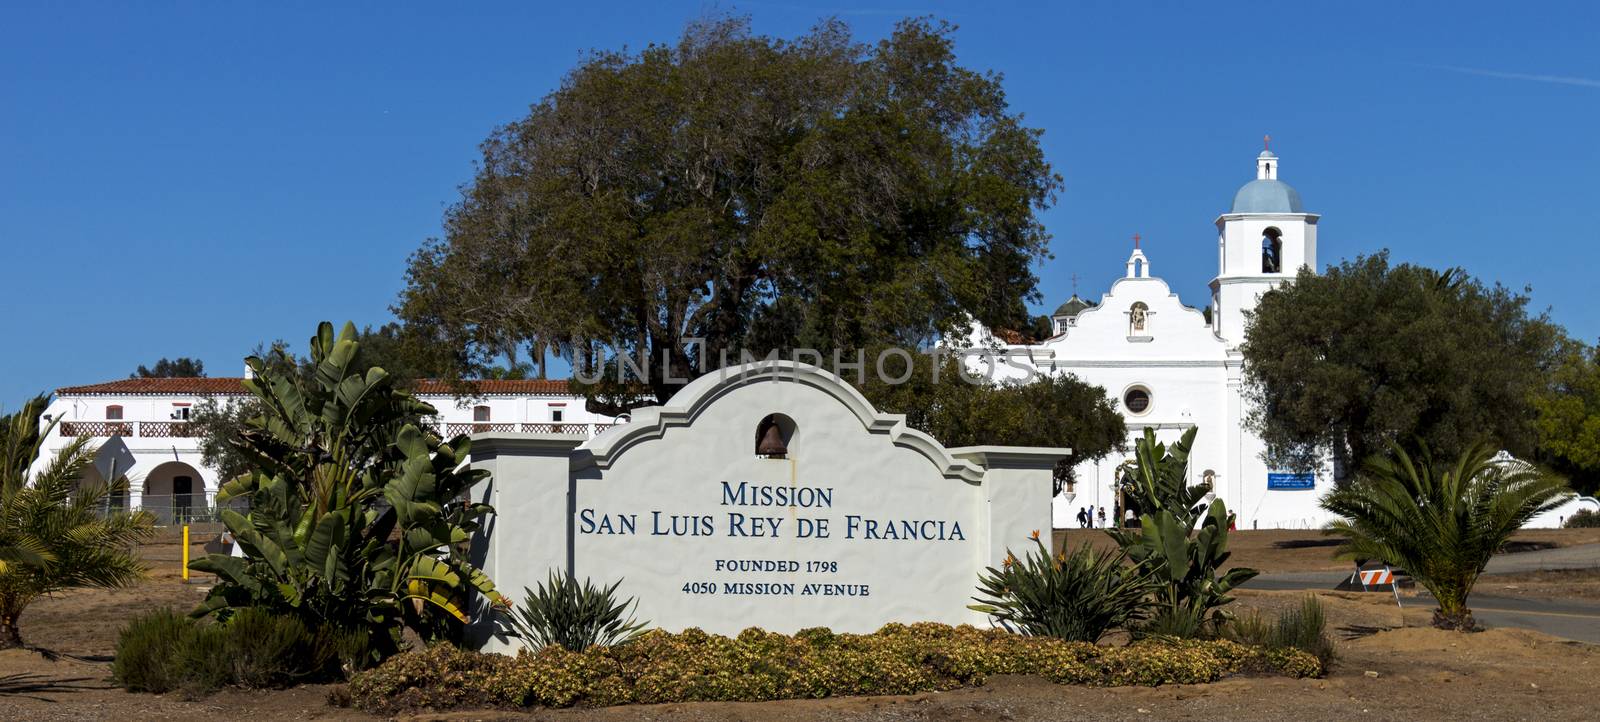 SAN DIEGO, CA - NOVEMBER 07, 2017: Sign for Mission Basilica San Diego de Alcala,founded on 1798.